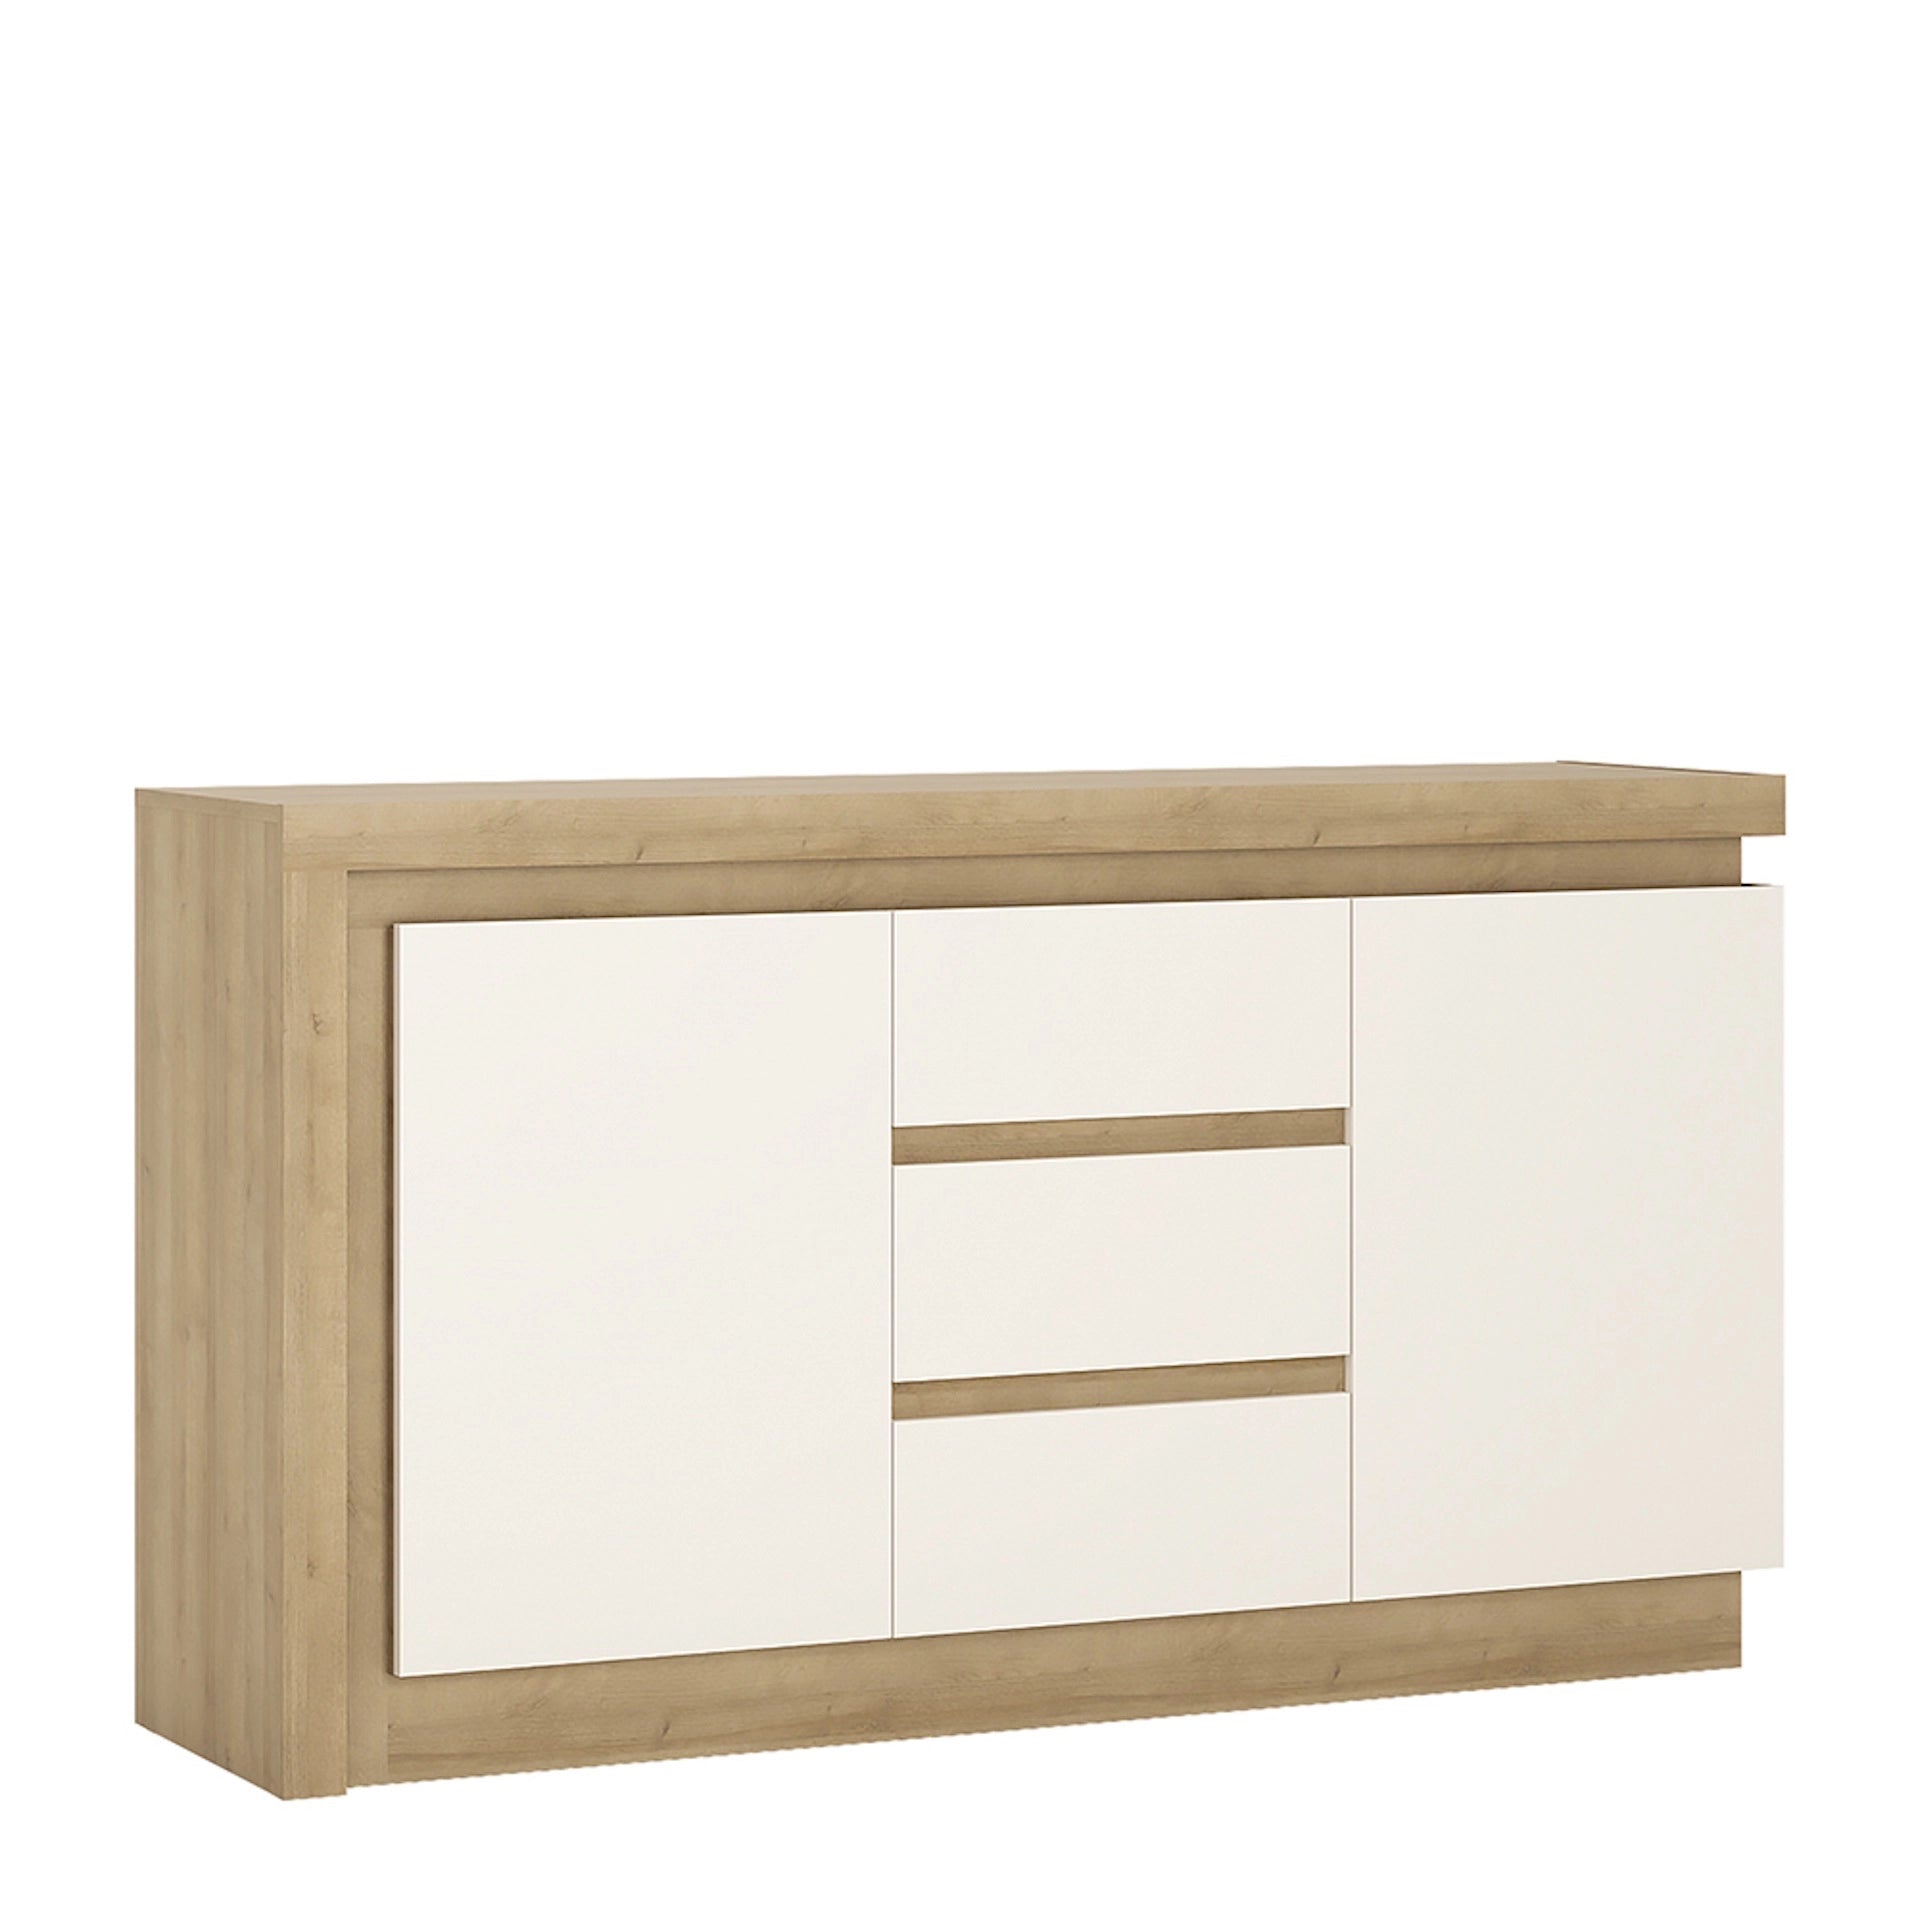 Furniture To Go Lyon 2 Door 3 Drawer Sideboard in Riviera Oak/White High Gloss